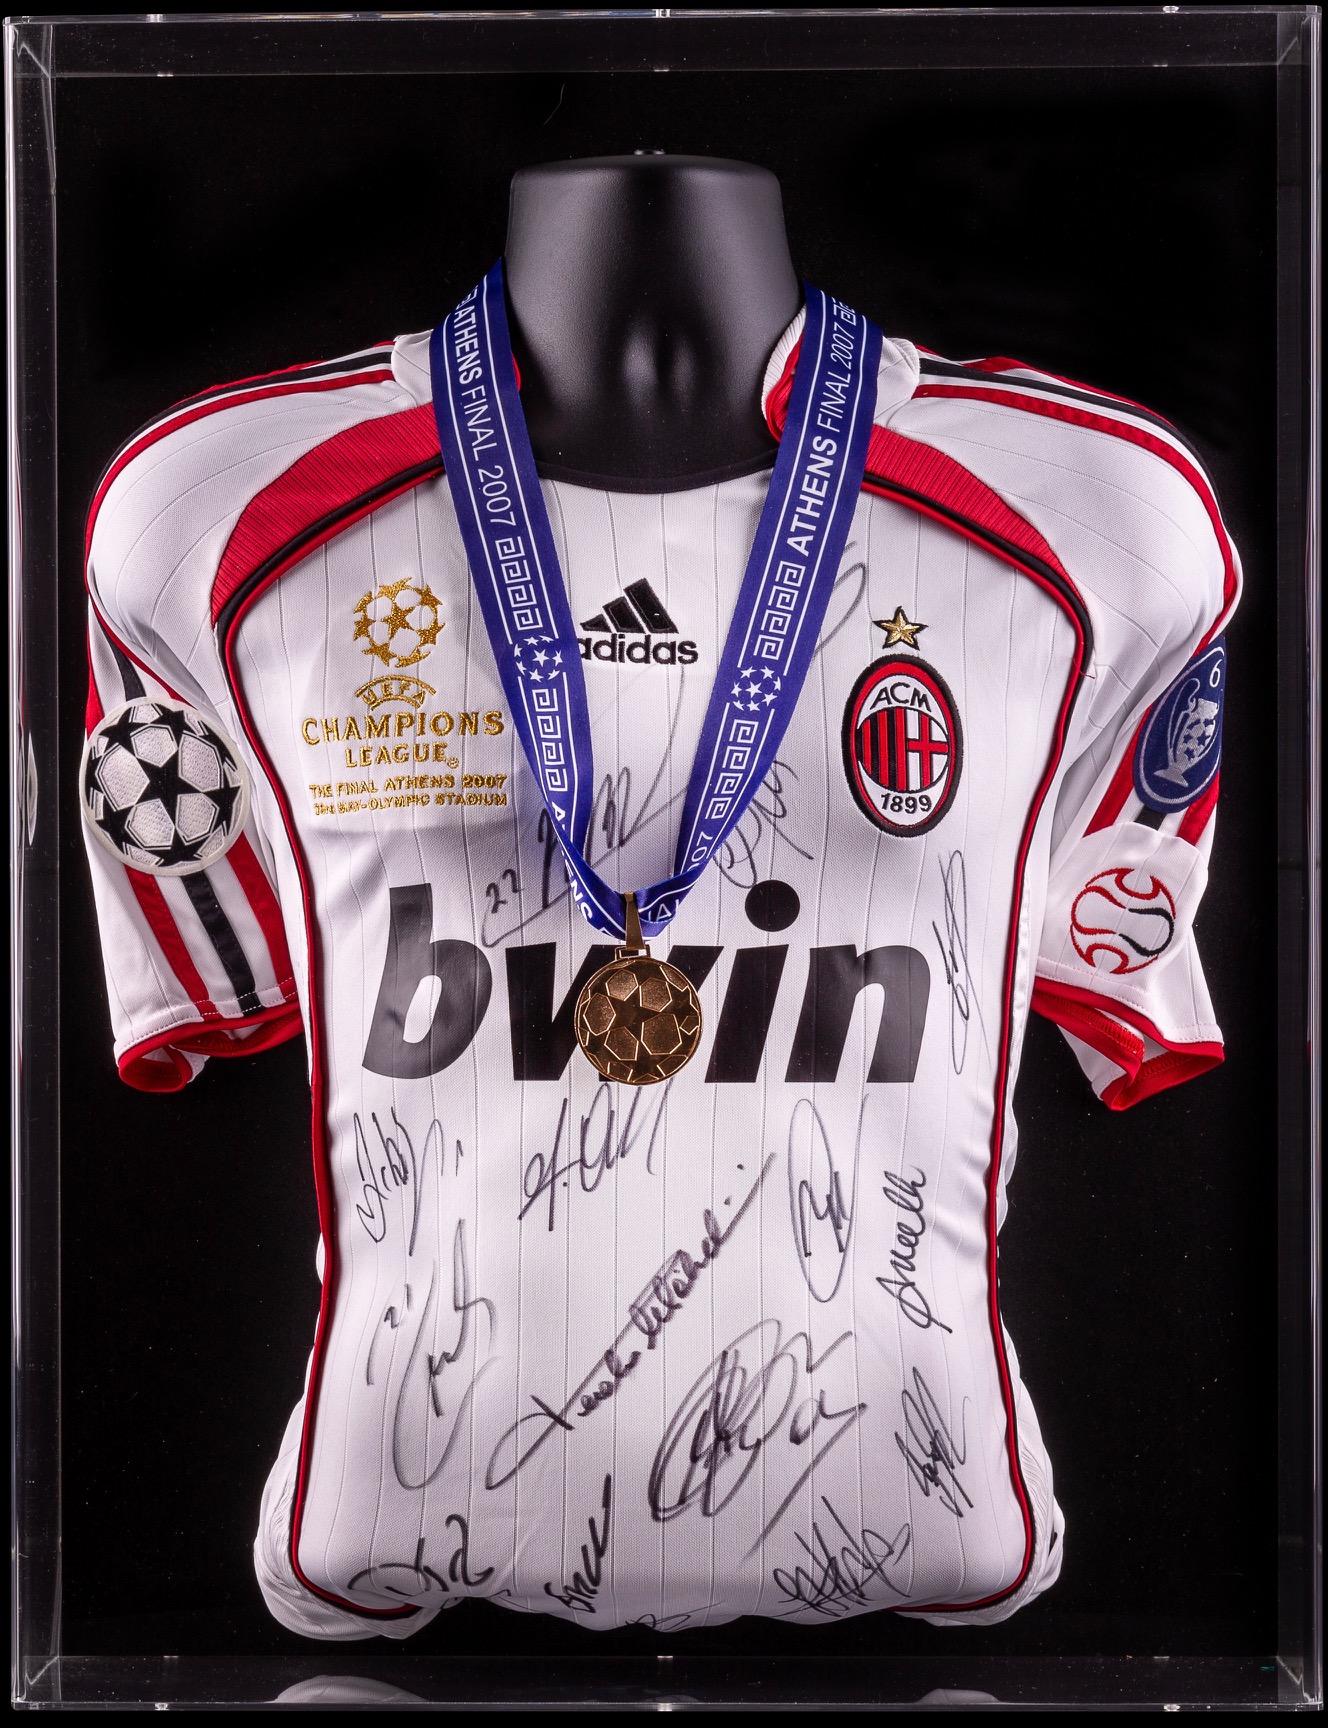 løgner Ondartet tumor Angreb A.C Milan Team Signed Champions League Final Shirt & Medal Display 2007 -  Golden Soccer Signings